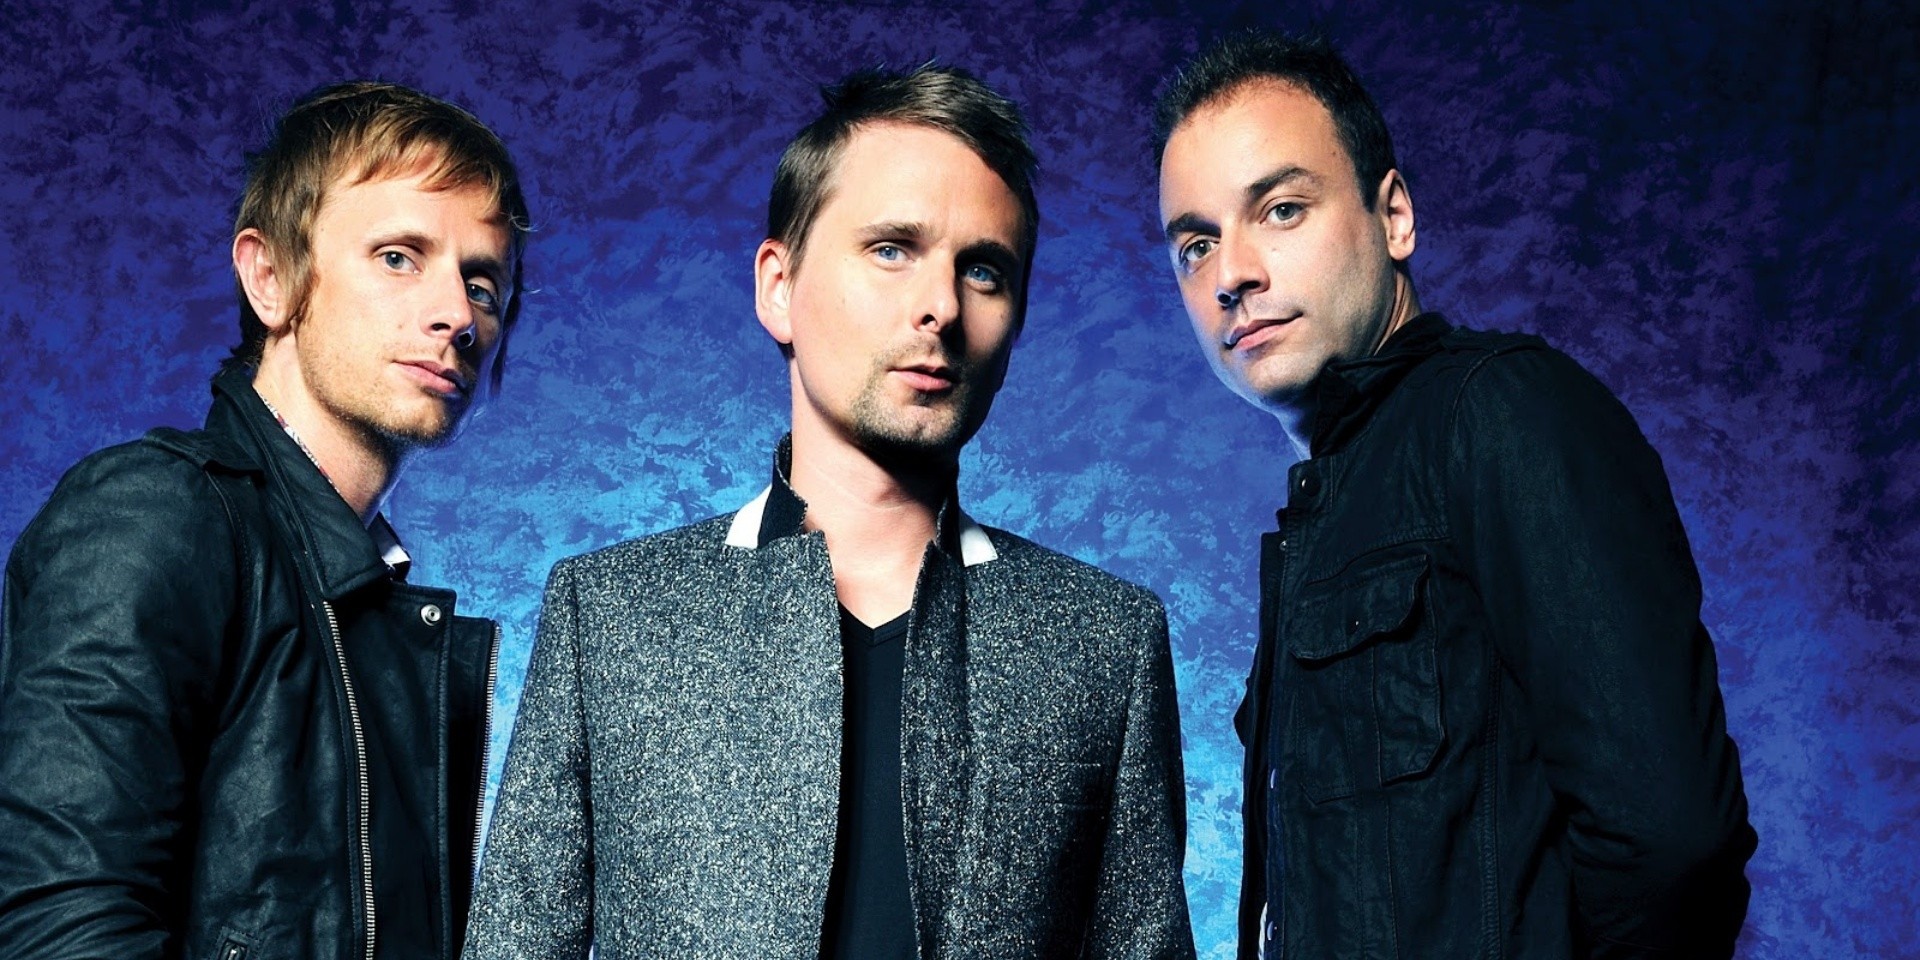 Muse performs Matt Bellamy's new single 'Pray' off Game Of Thrones soundtrack  – listen